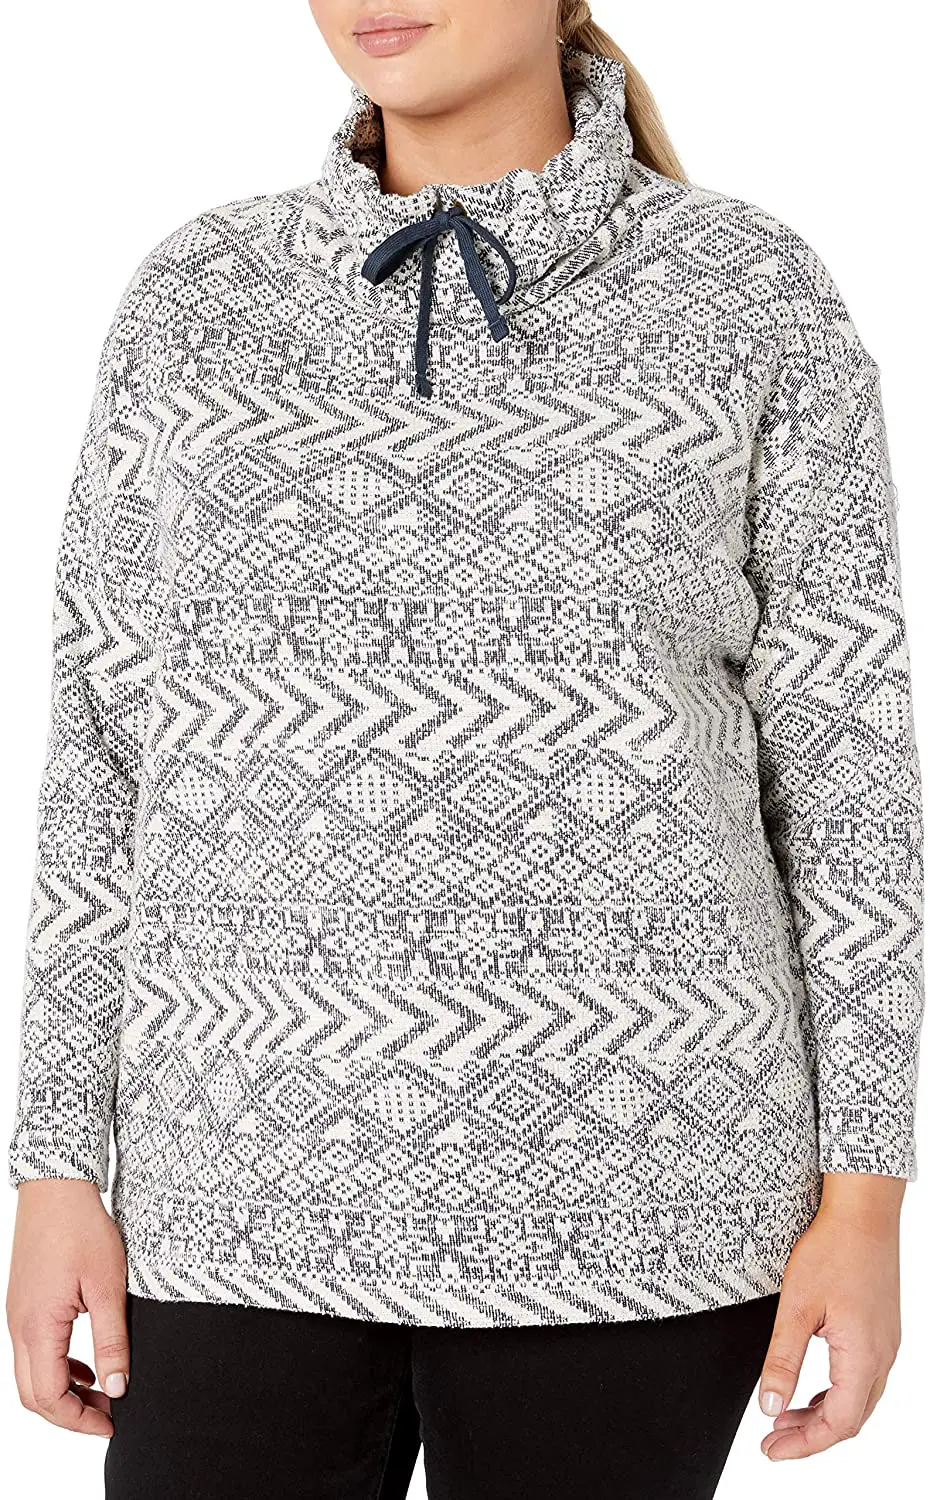 Plus Size Turtleneck Sweater 08